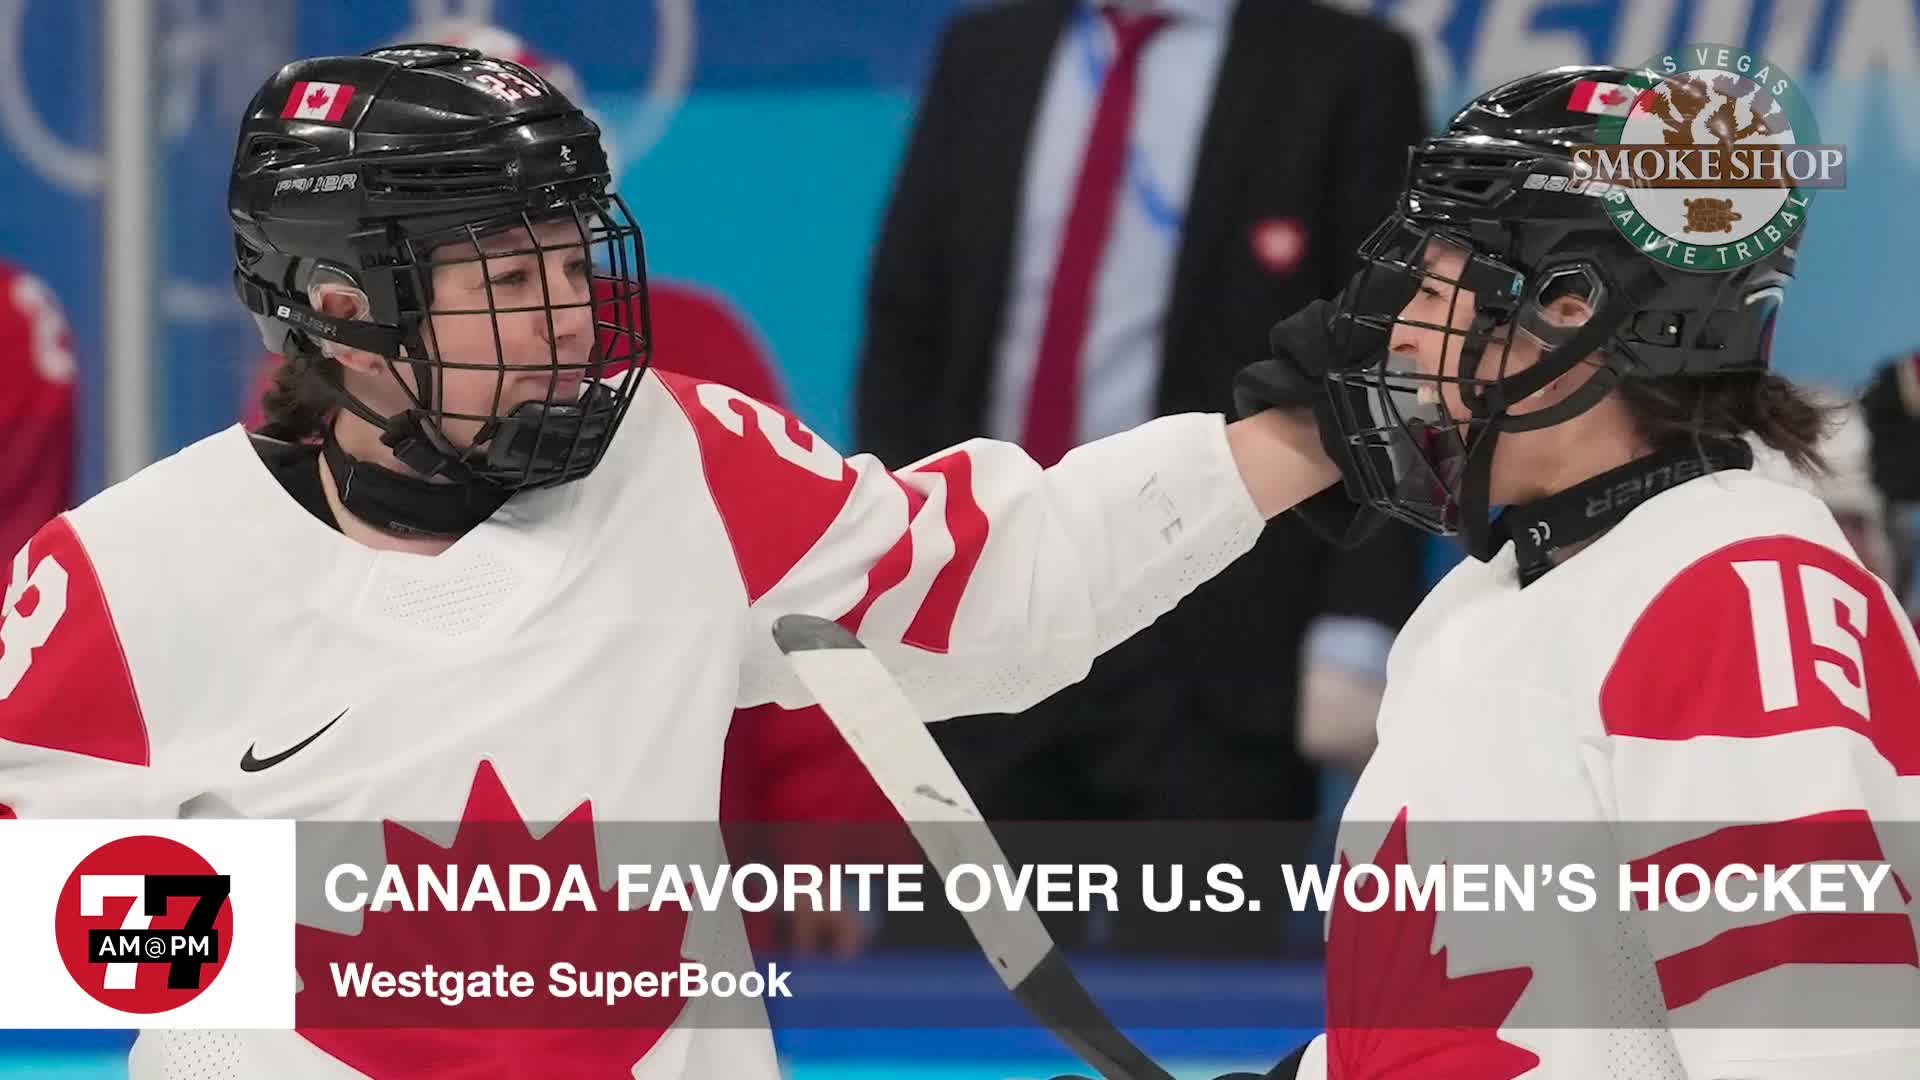 Canada favorite over U.S. women’s hockey